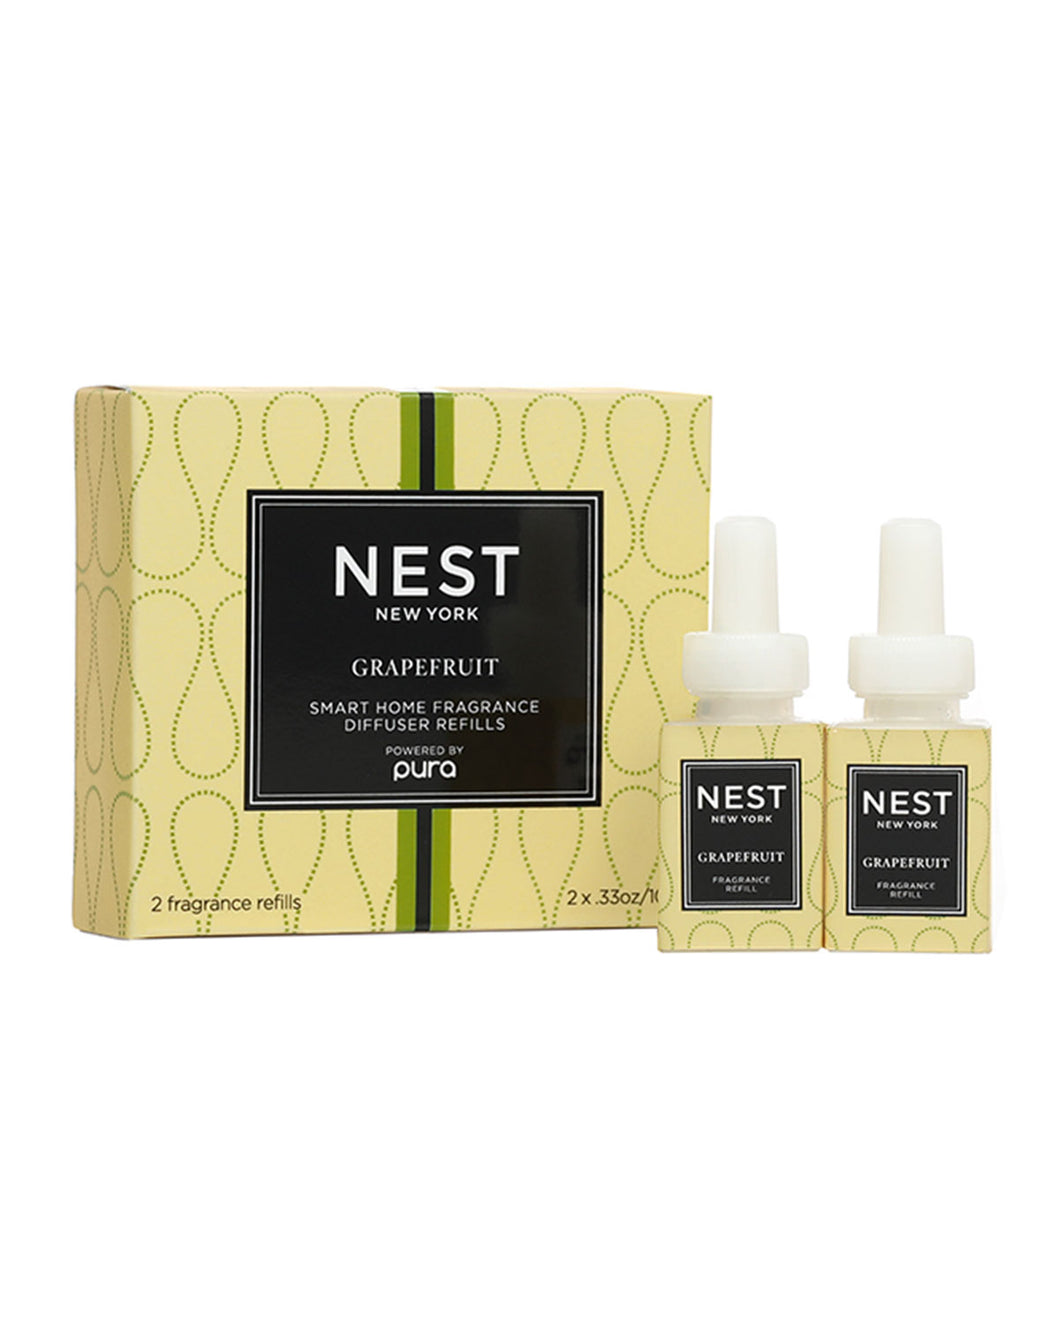 NEST Grapefruit Refill Duo for Pura Smart Home Fragrance Diffuser